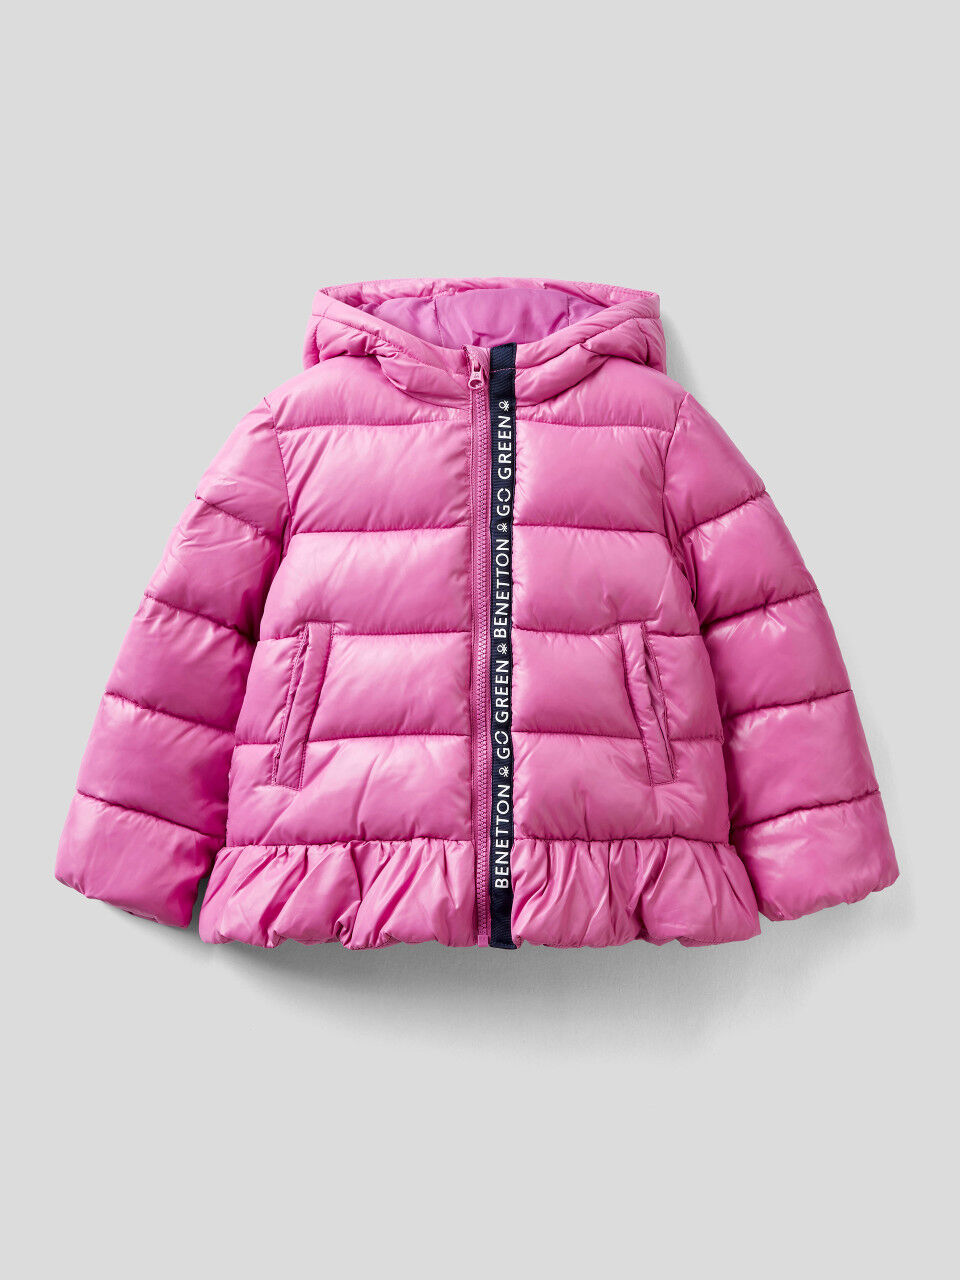 Benetton United Colours Of Benetton Pink Sleeveless Coat Jacket Baby Girls Size 1-2 Years 